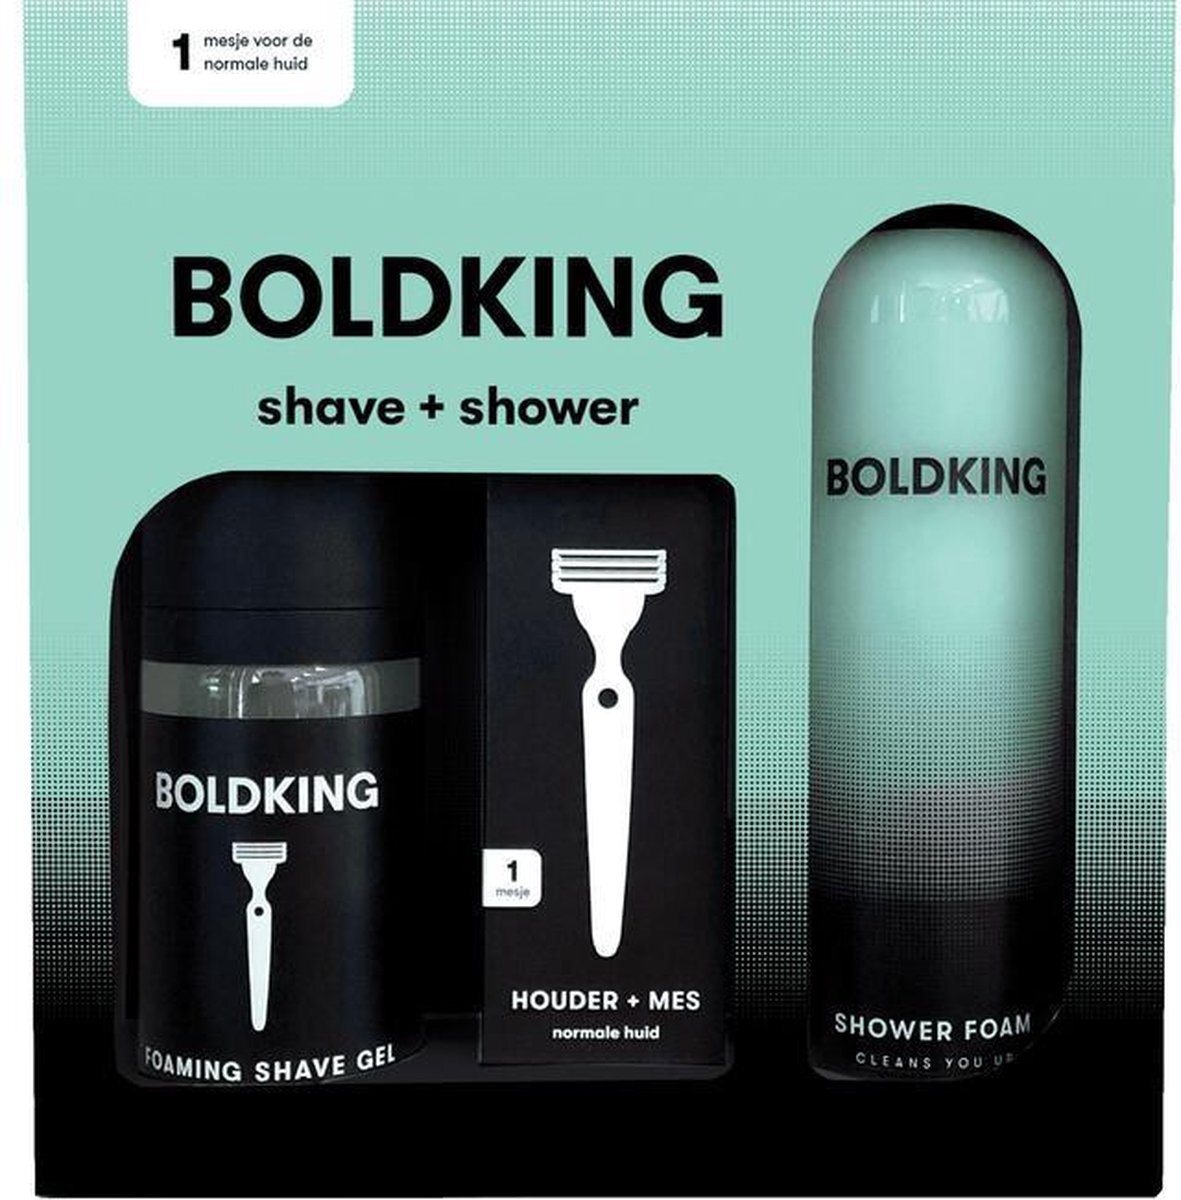 Boldking Shave & Shower giftset